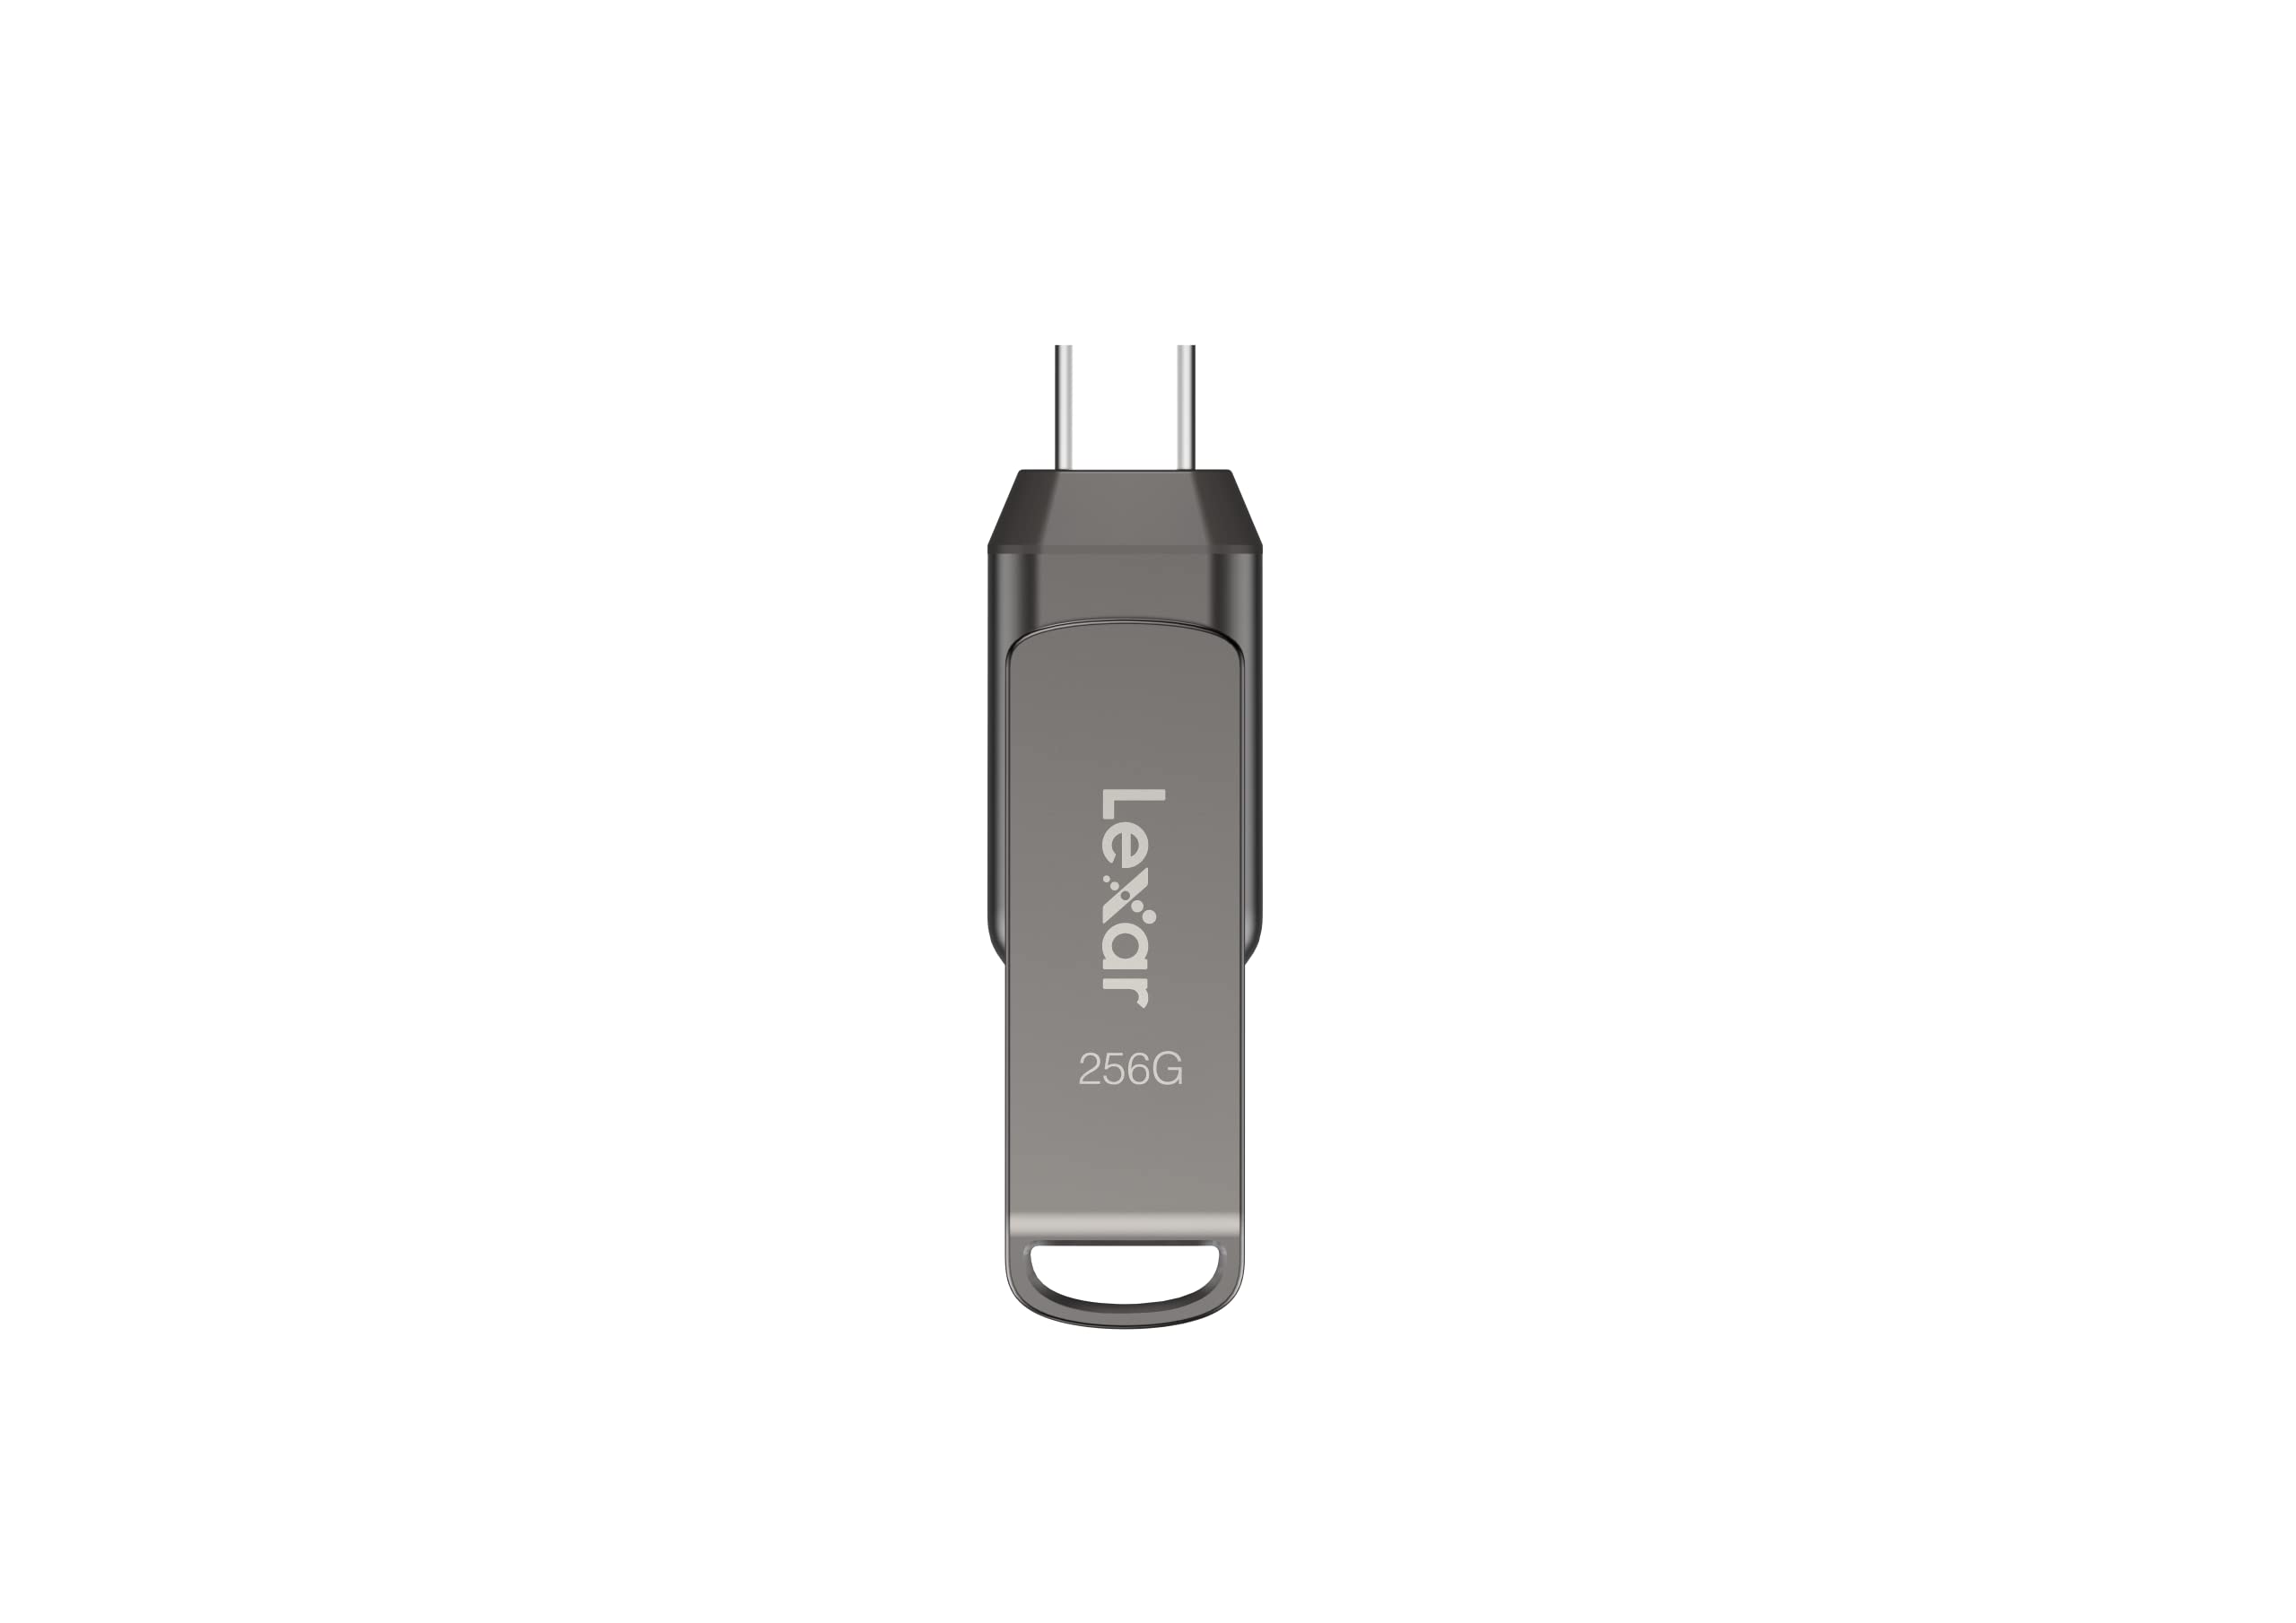 Lexar 256GB JumpDrive Dual Drive D400 USB 3.1 Type-C and Type-A Flash Drive, Up to 130MB/s Read (LJDD400256G-BNQNU)